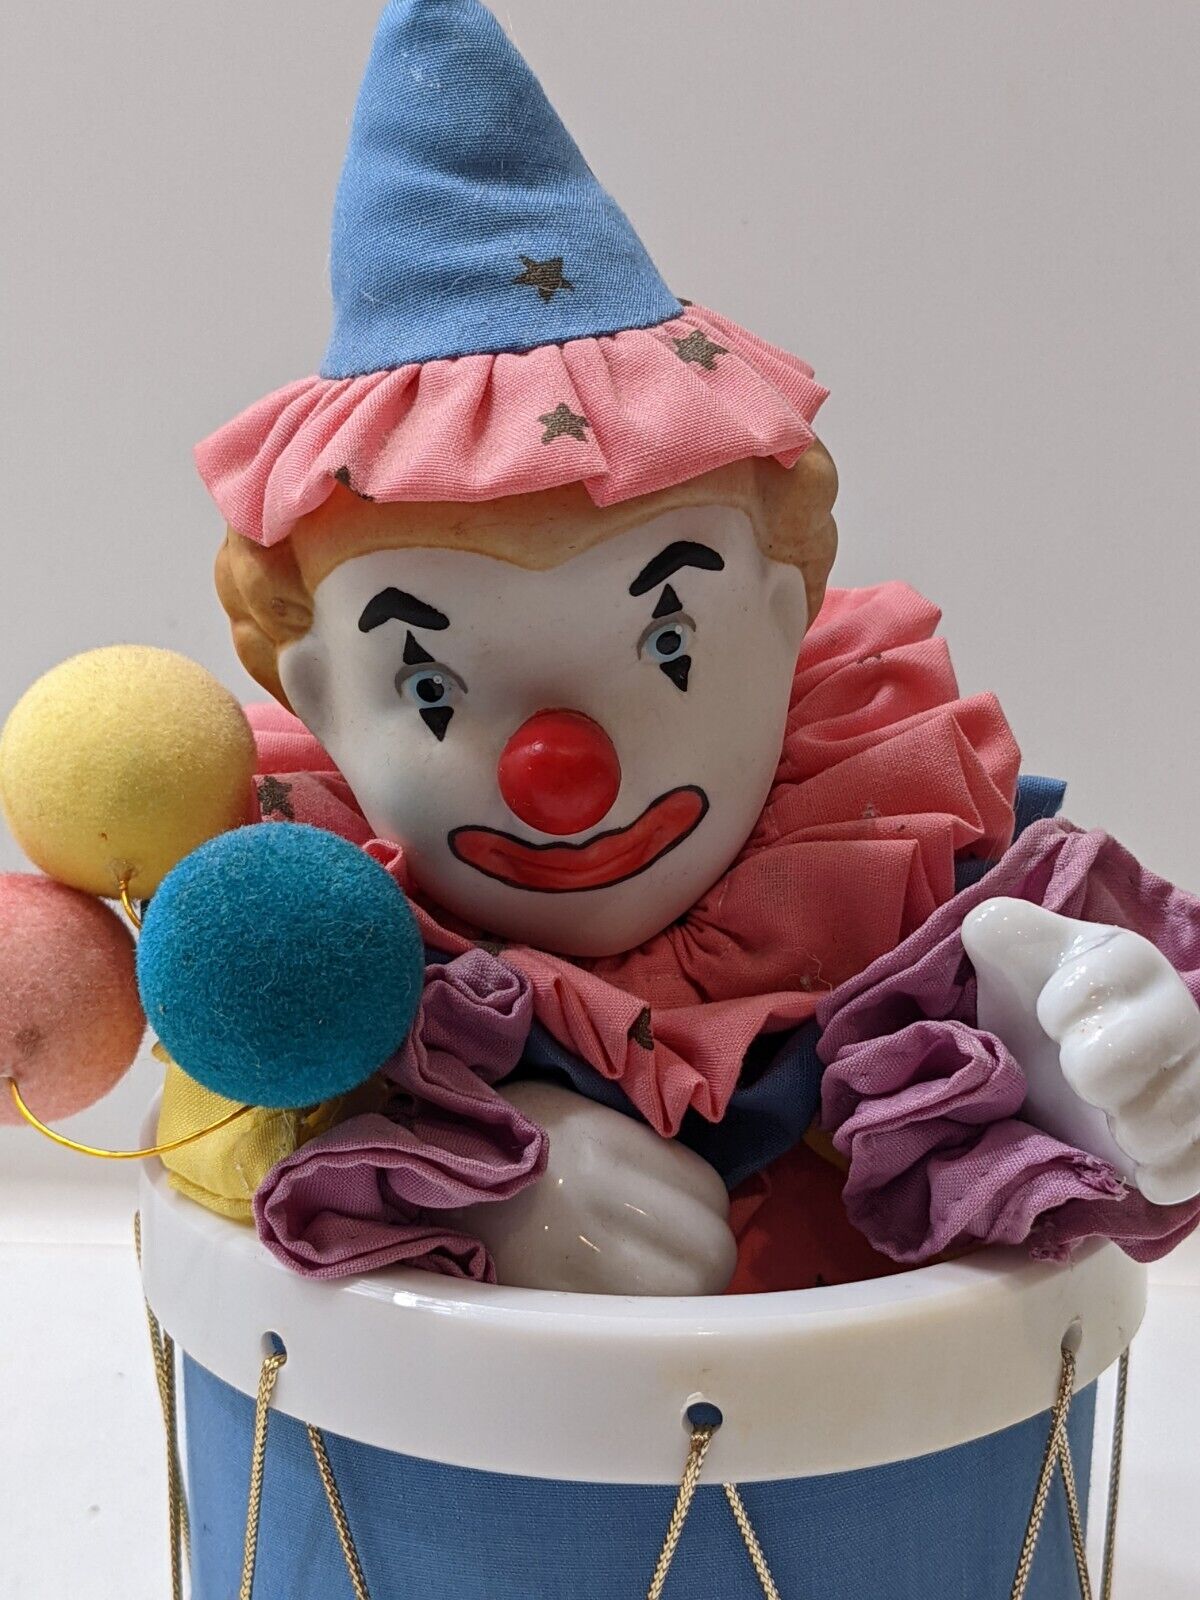 1989 San Francisco Music Box Company moving Porcelain Clown